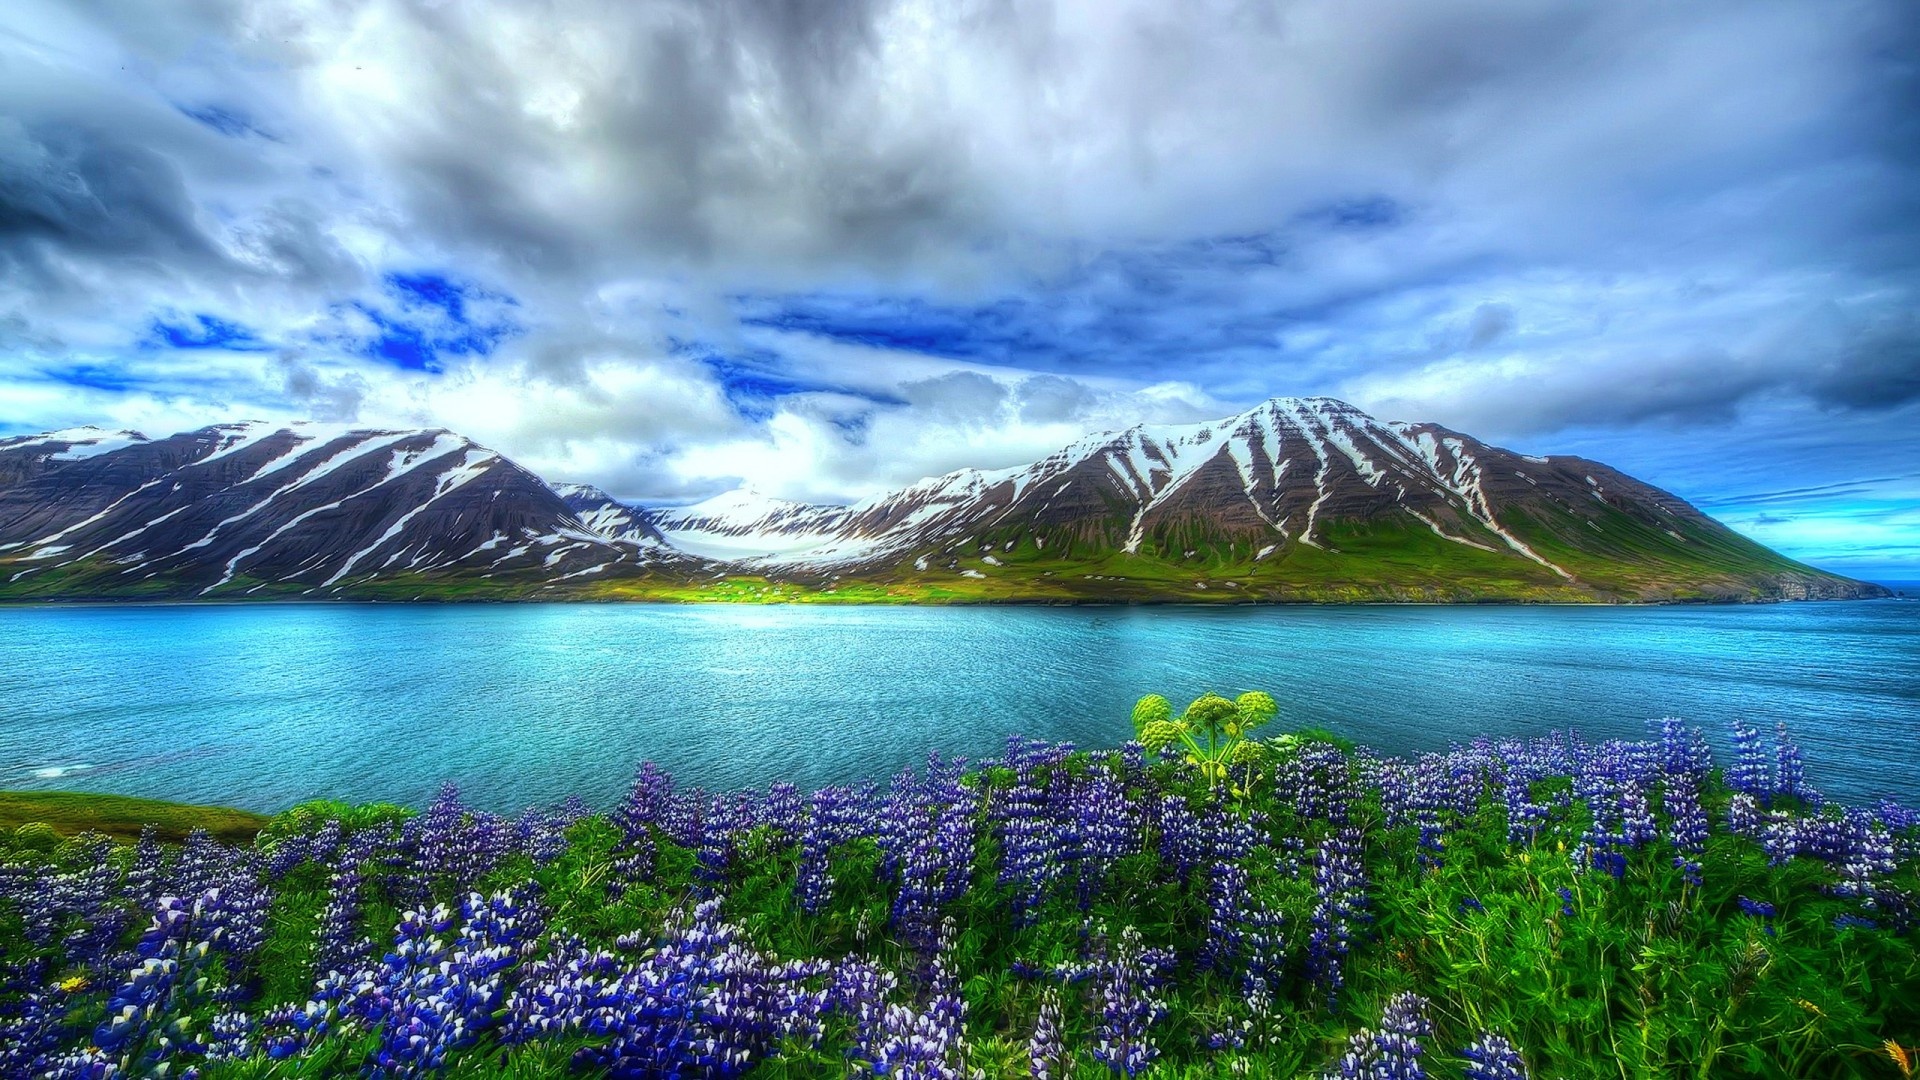 Mountain lake surrounded by beautiful bluebonnets, 1920x1080 Full HD Desktop